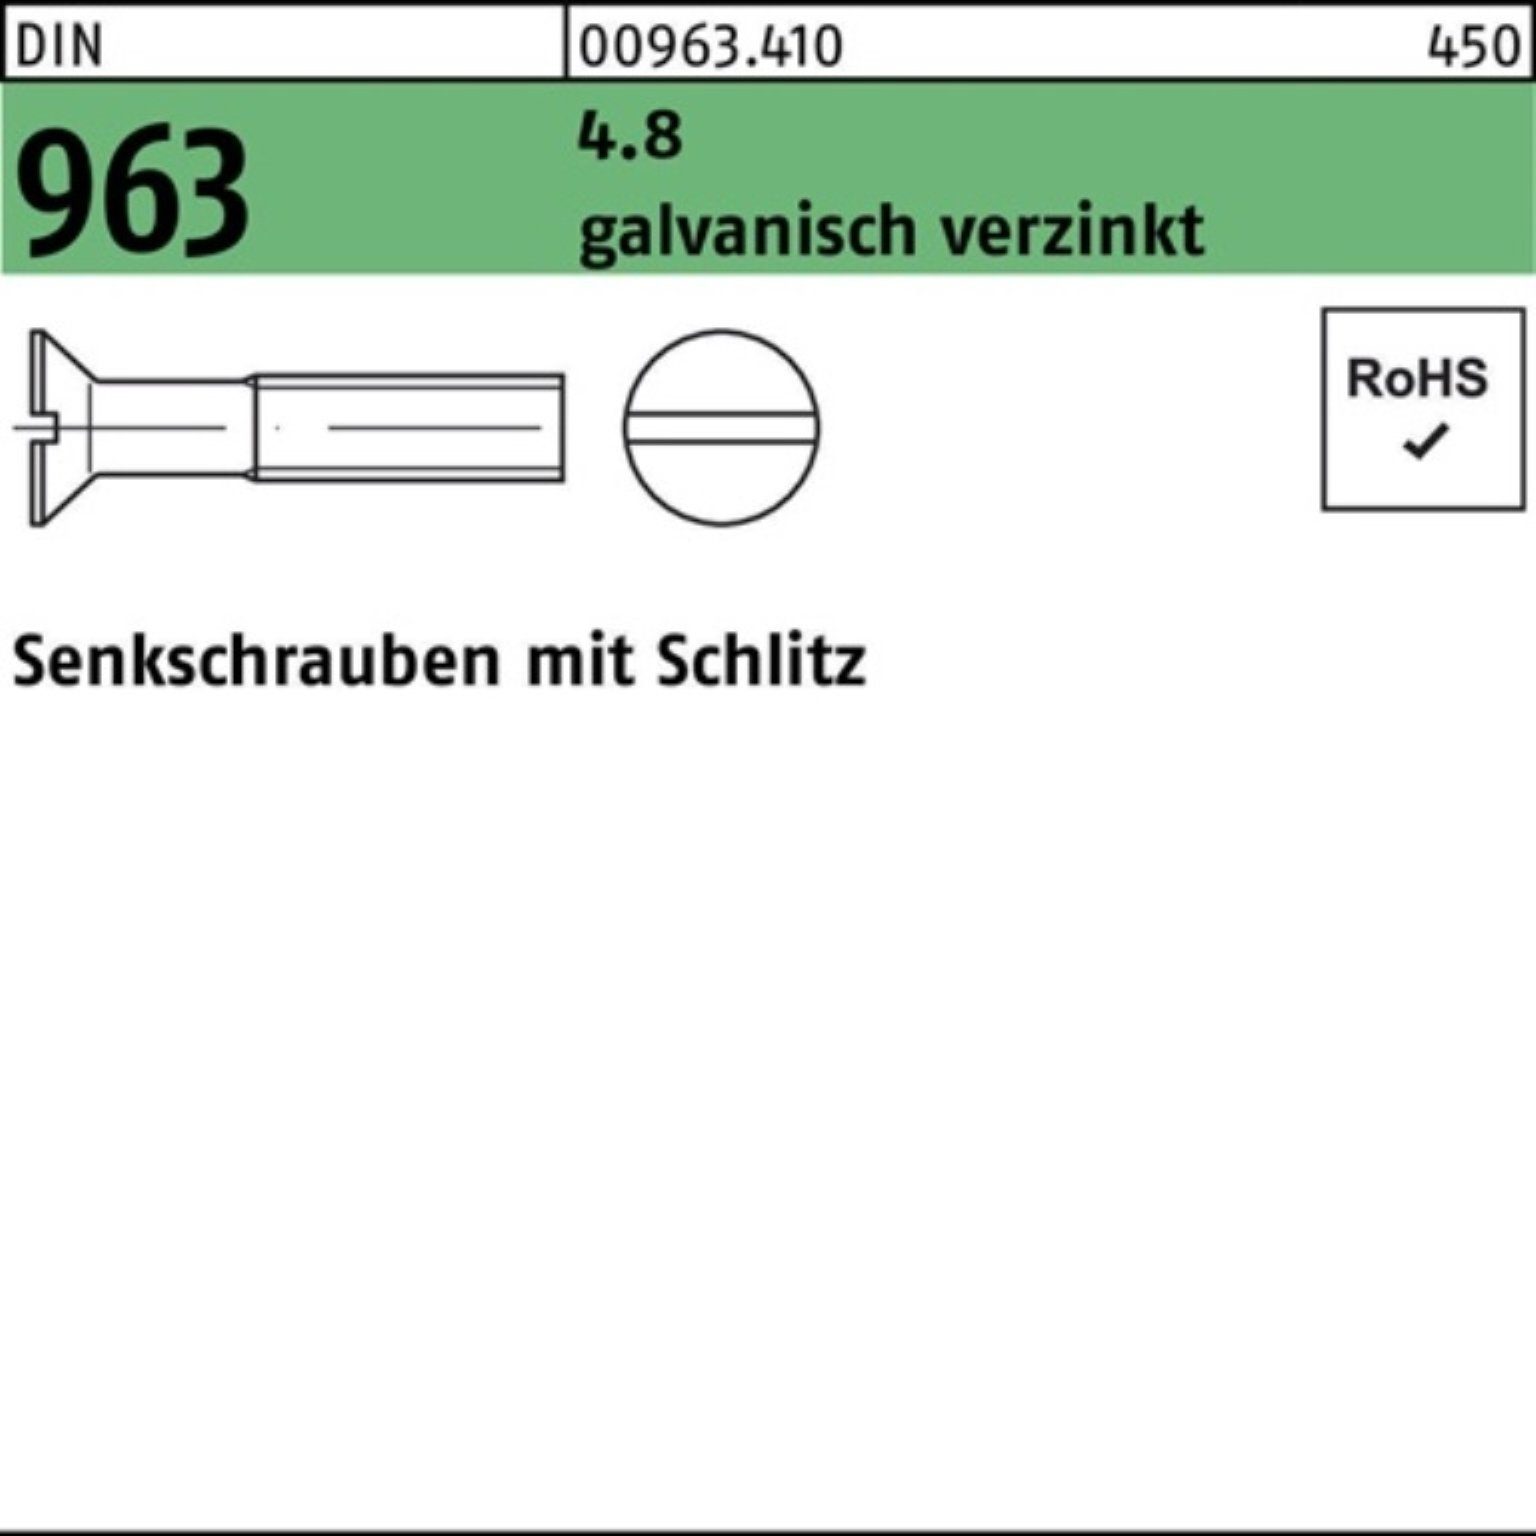 Senkschraube Senkschraube 22 200 Reyher 4.8 galv.verz. 200er 963 Pack DIN M4x Schlitz Stü